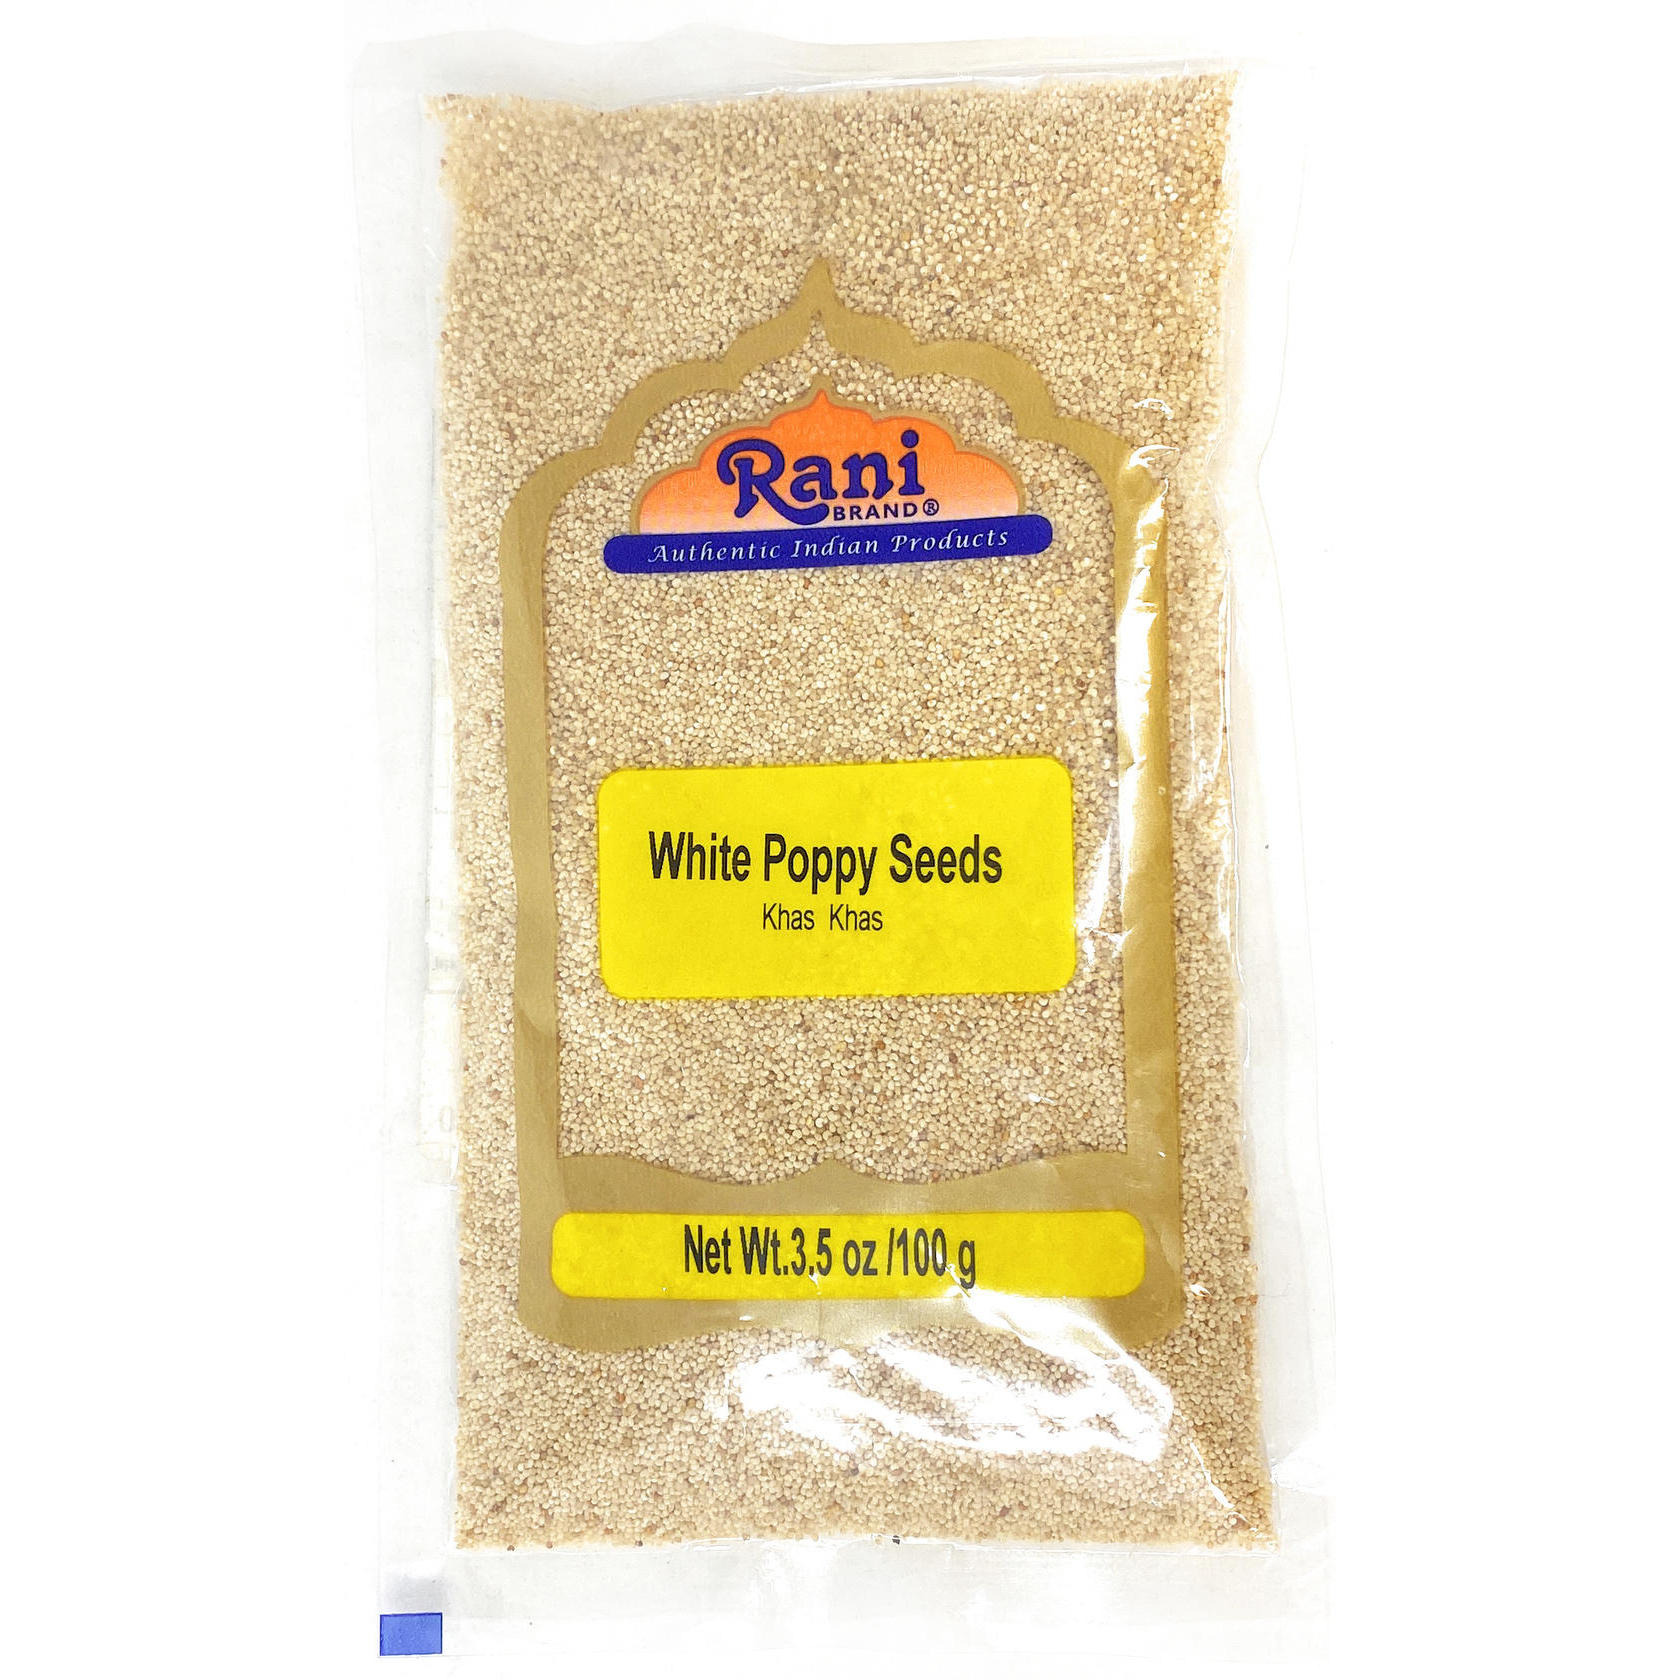 Rani White Poppy Seeds Whole (Khus Khus) Spice 3.5oz (100g) ~ Natural | Vegan | Gluten Free Ingredients | NON-GMO | Indian Origin